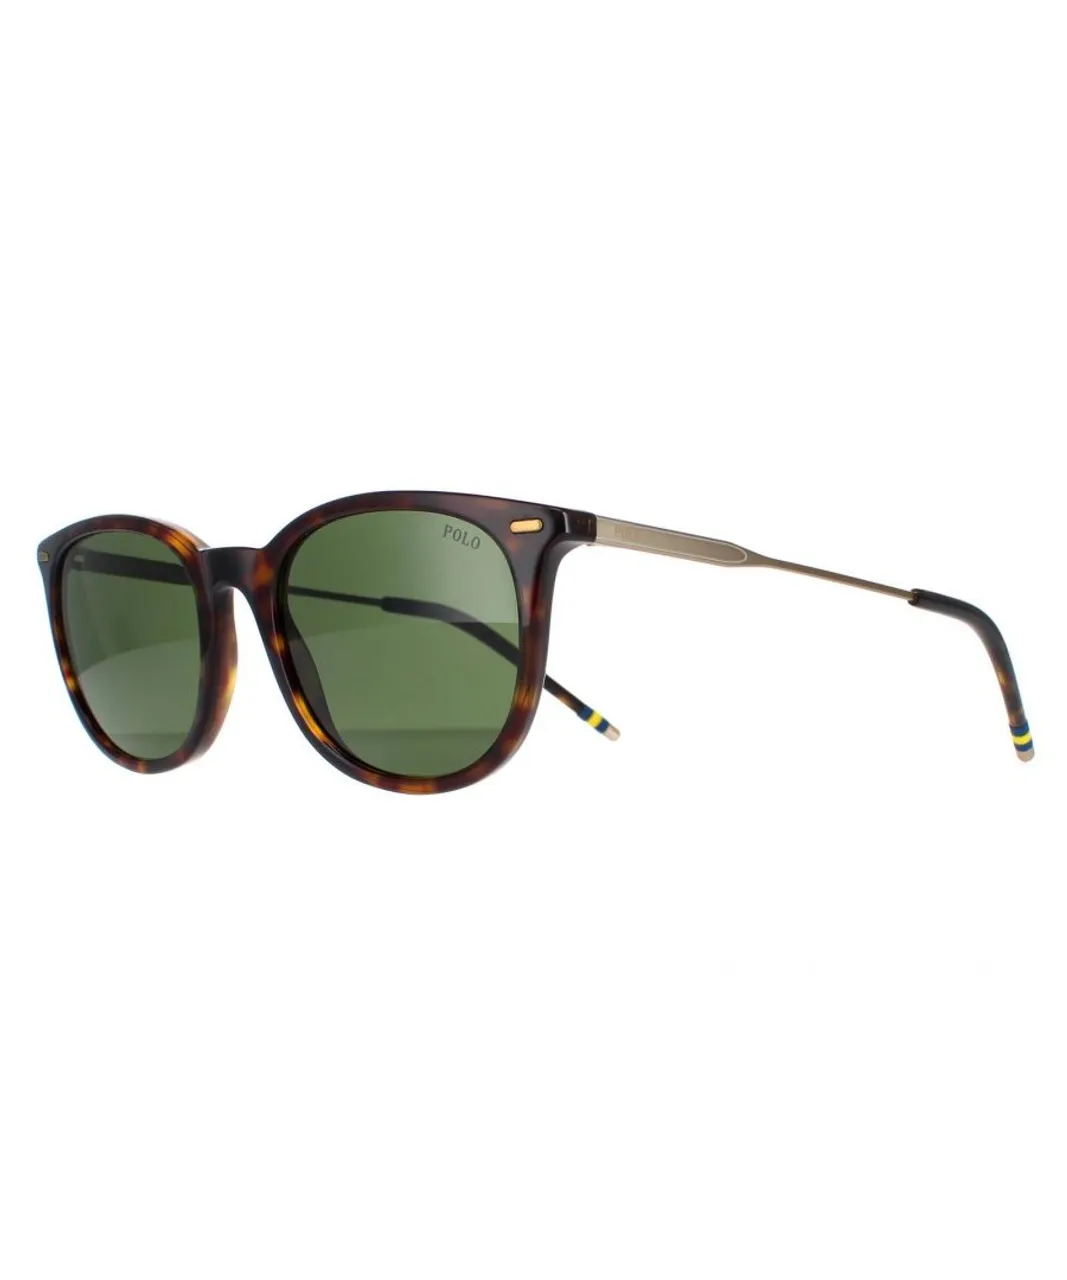 Polo Ralph Lauren Square Mens Shiny Dark Havana Bottle Green Sunglasses - Brown - One